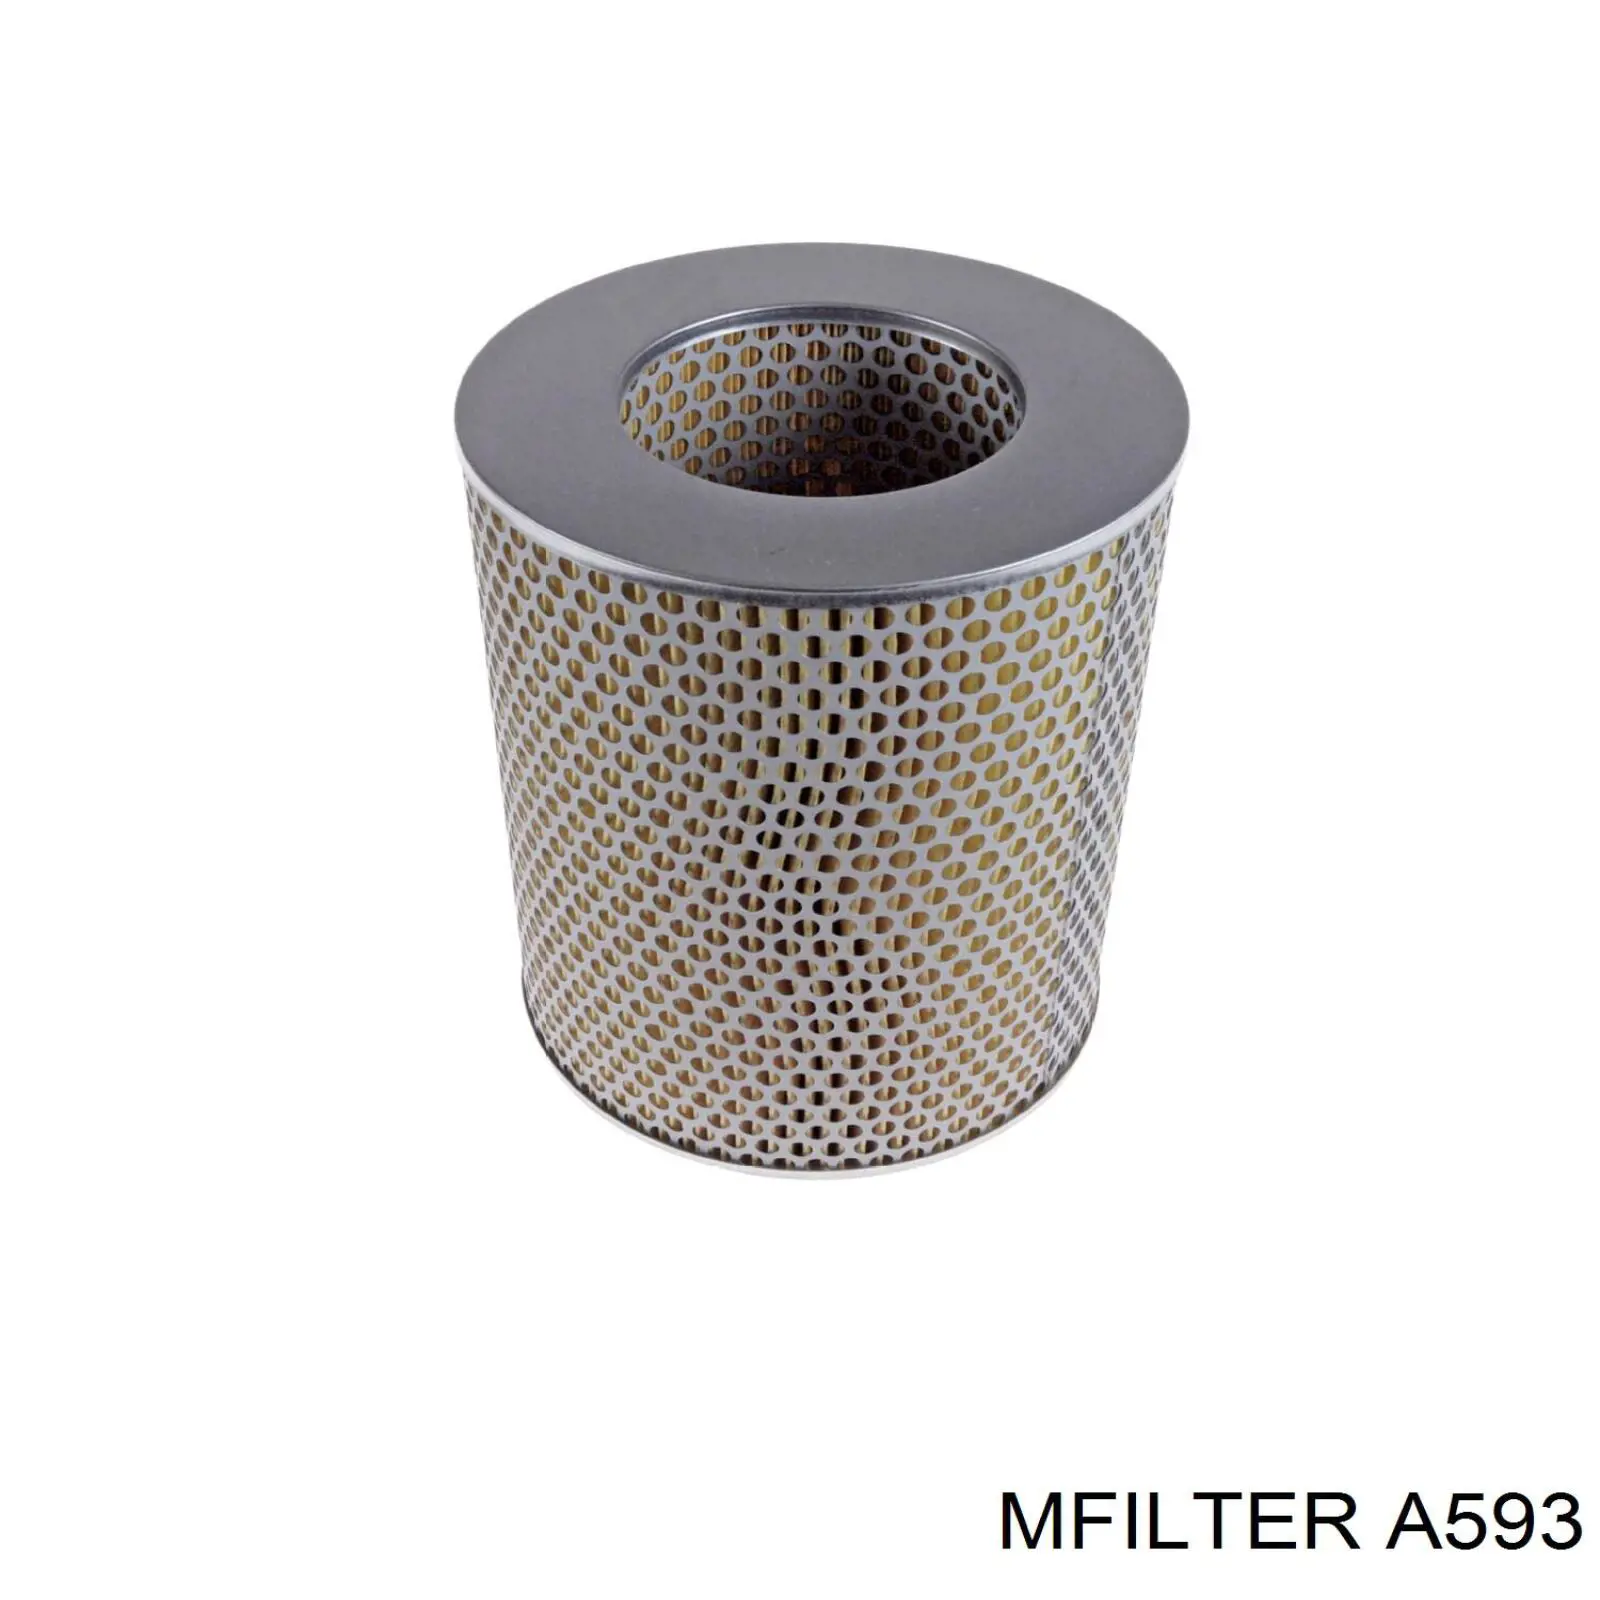 A 593 Mfilter filtro de aire